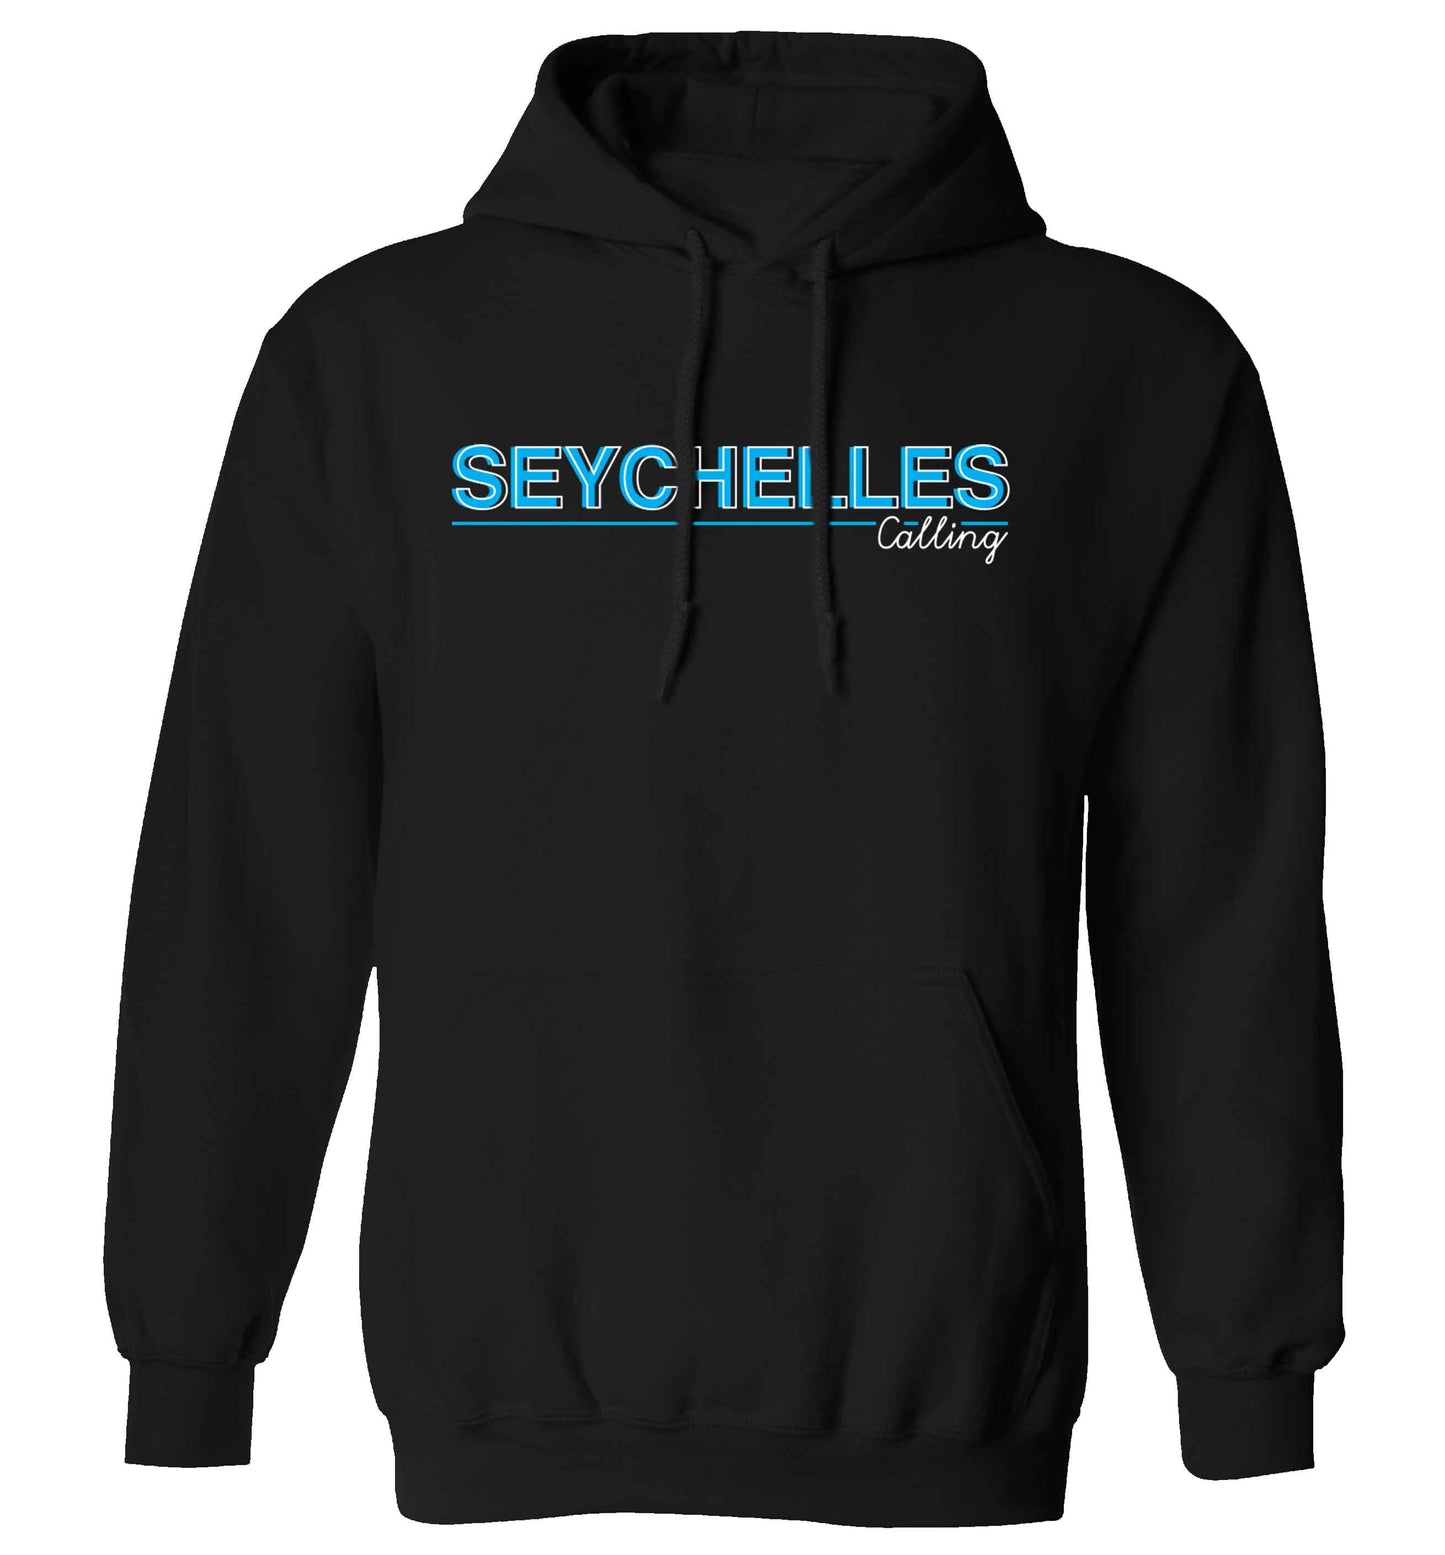 Seychelles calling adults unisex black hoodie 2XL